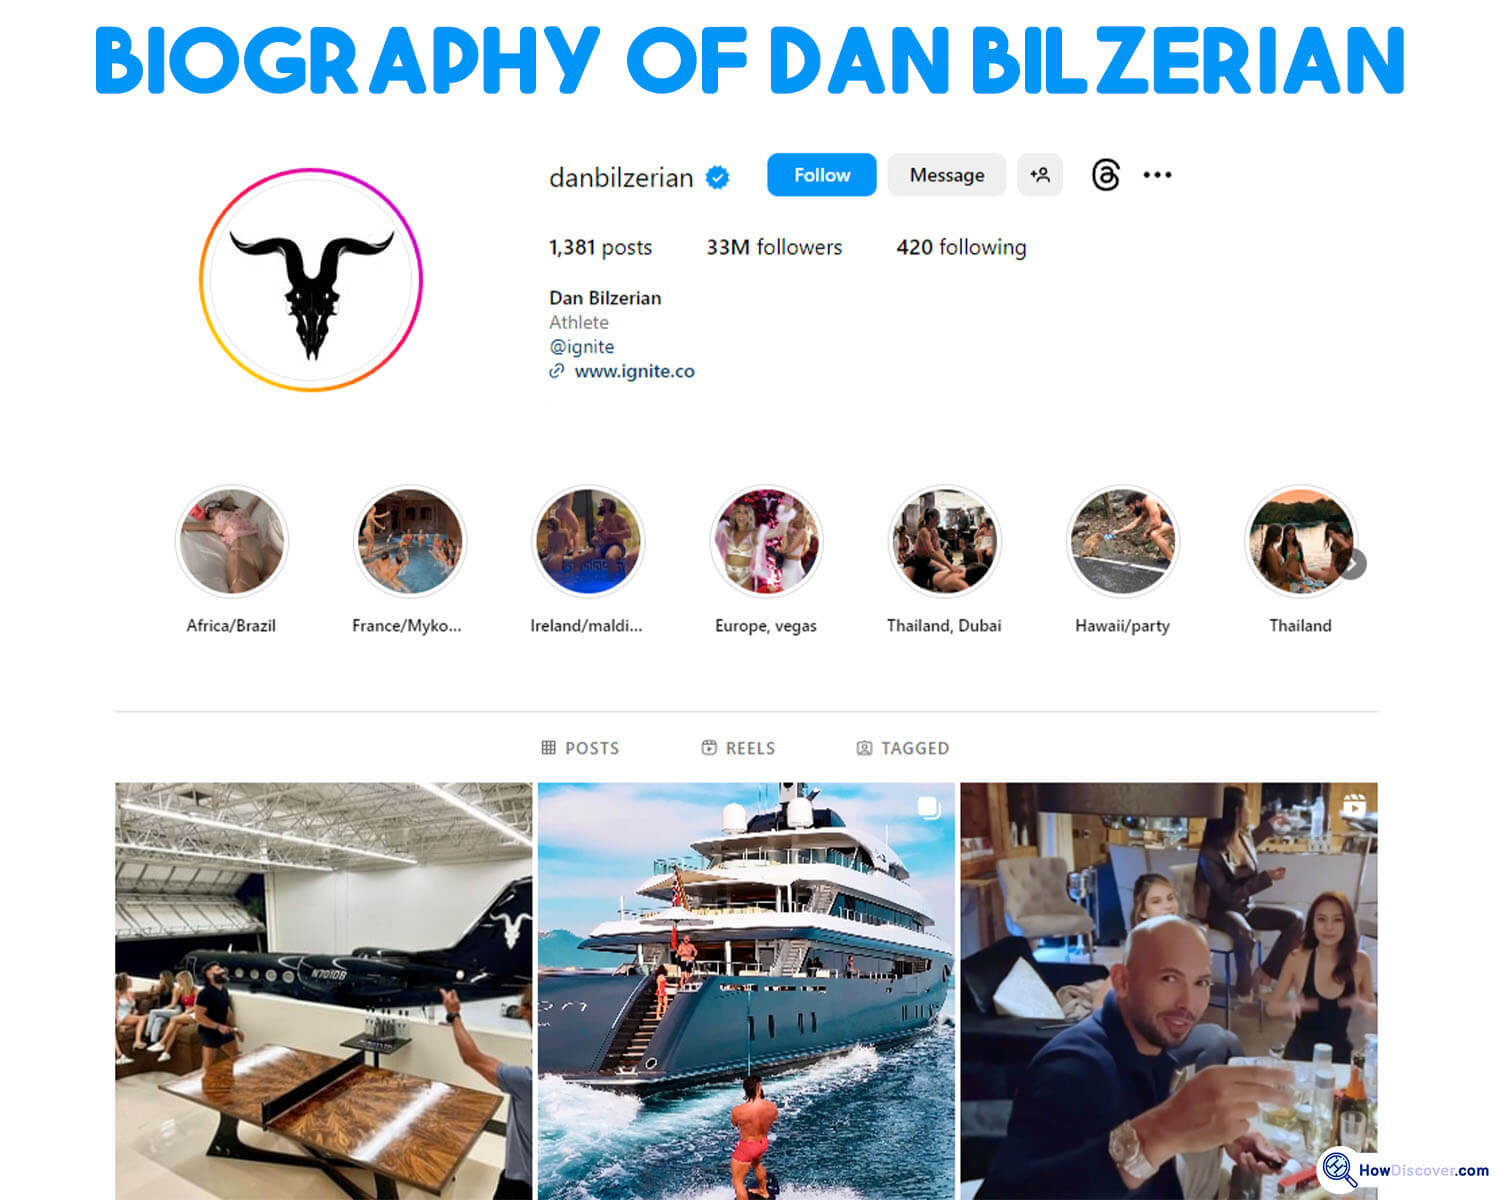 Biography of Dan Bilzerian - Who Is The King Of Instagram